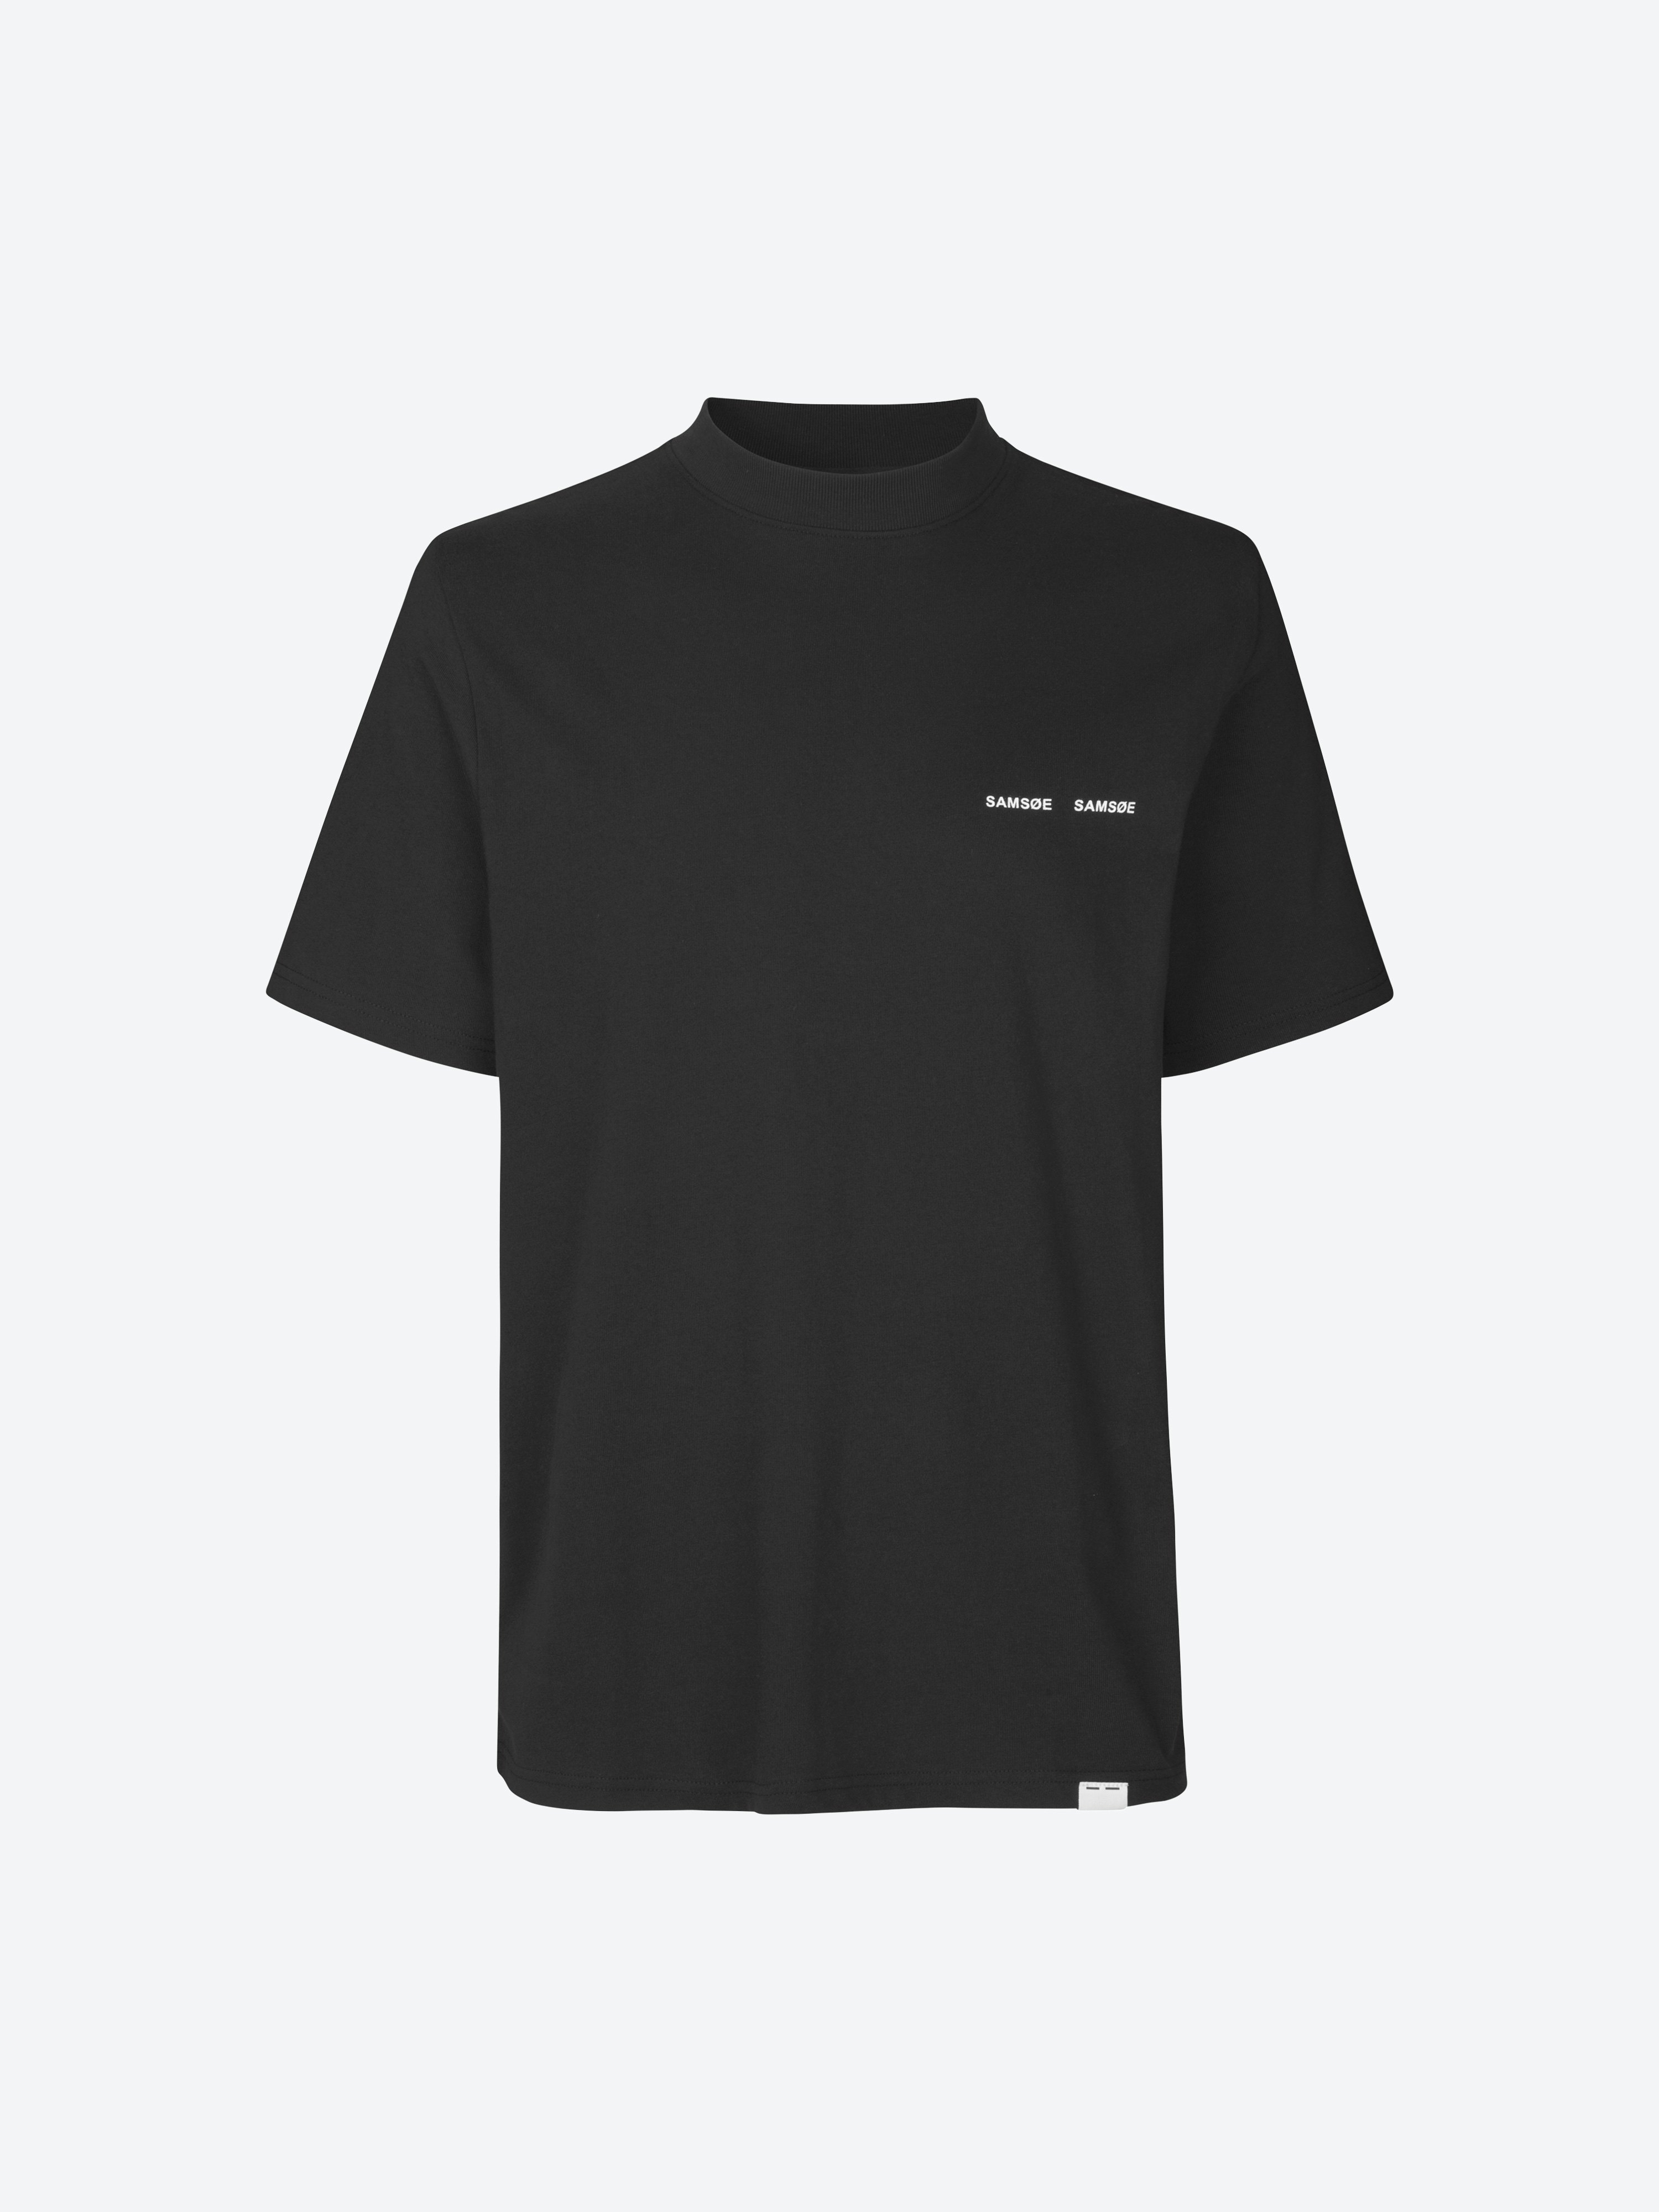 Samsoe T Shirt Sale Online, SAVE 30% mpgc.net